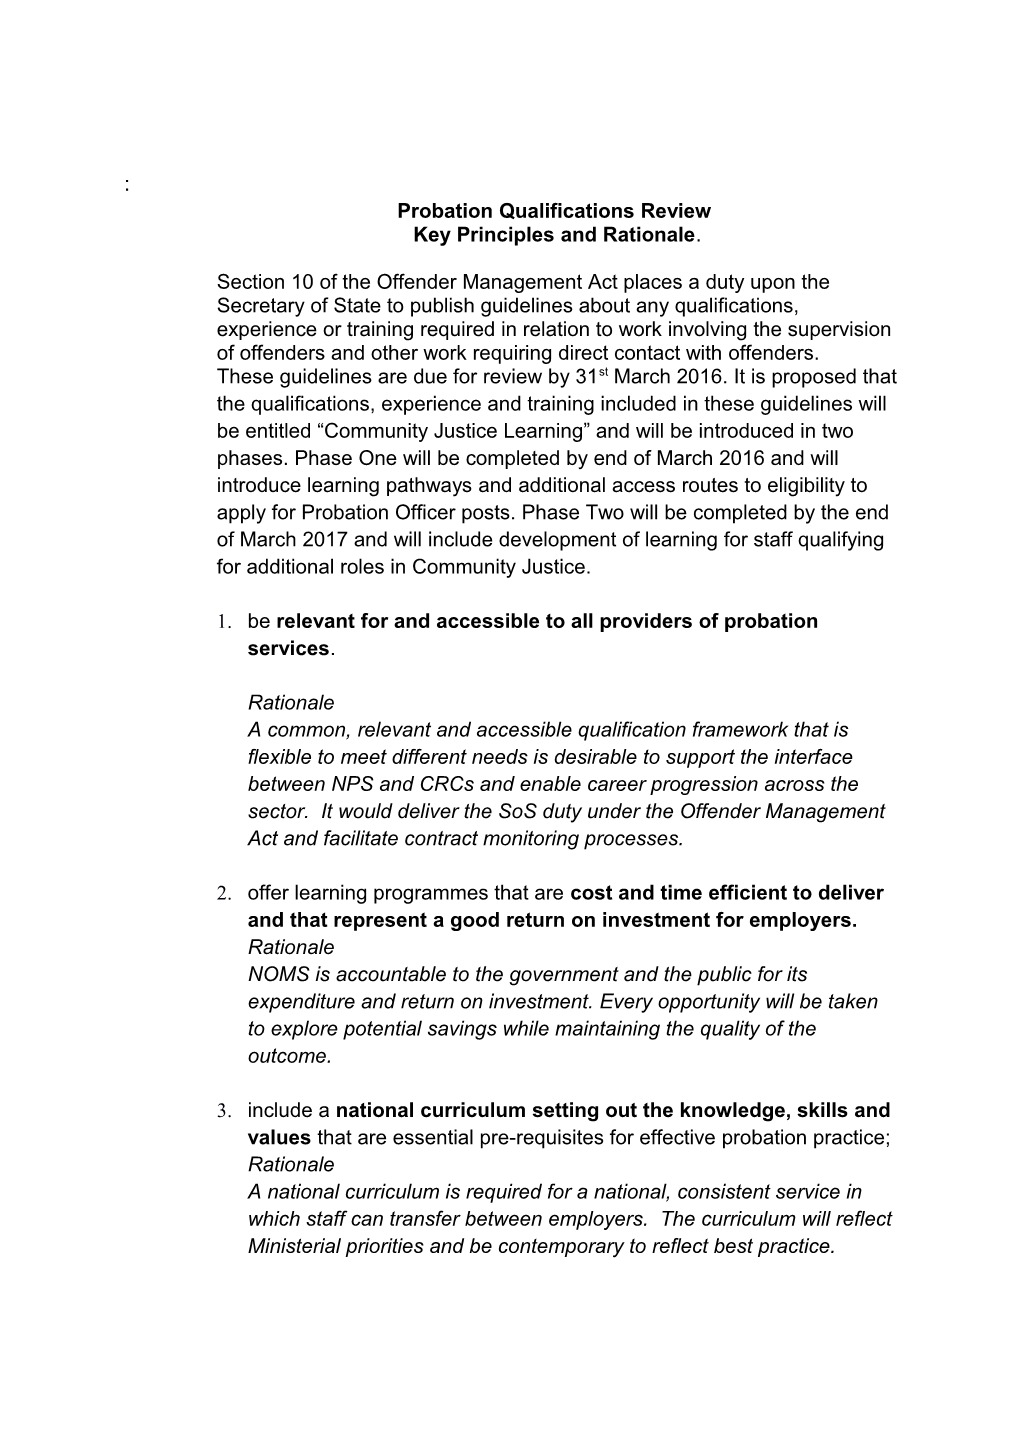 Key Principles of the New Probation Qualification Framework (NPQF)